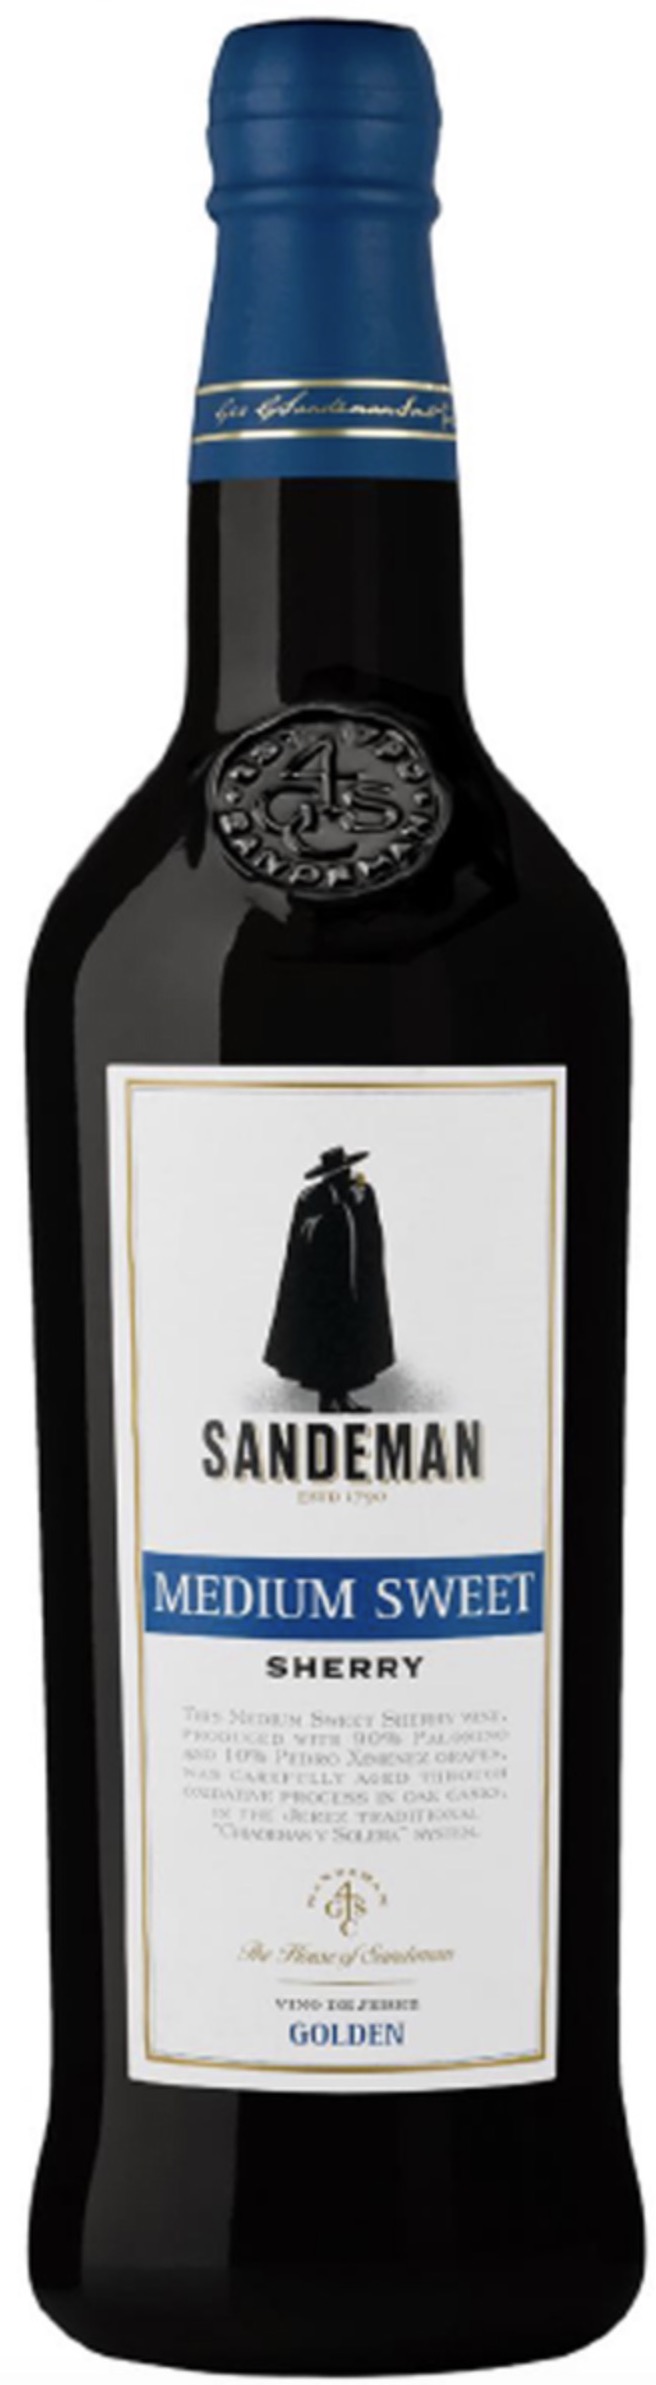 Sandeman Sherry Medium Sweet 15% vol. 0,75L